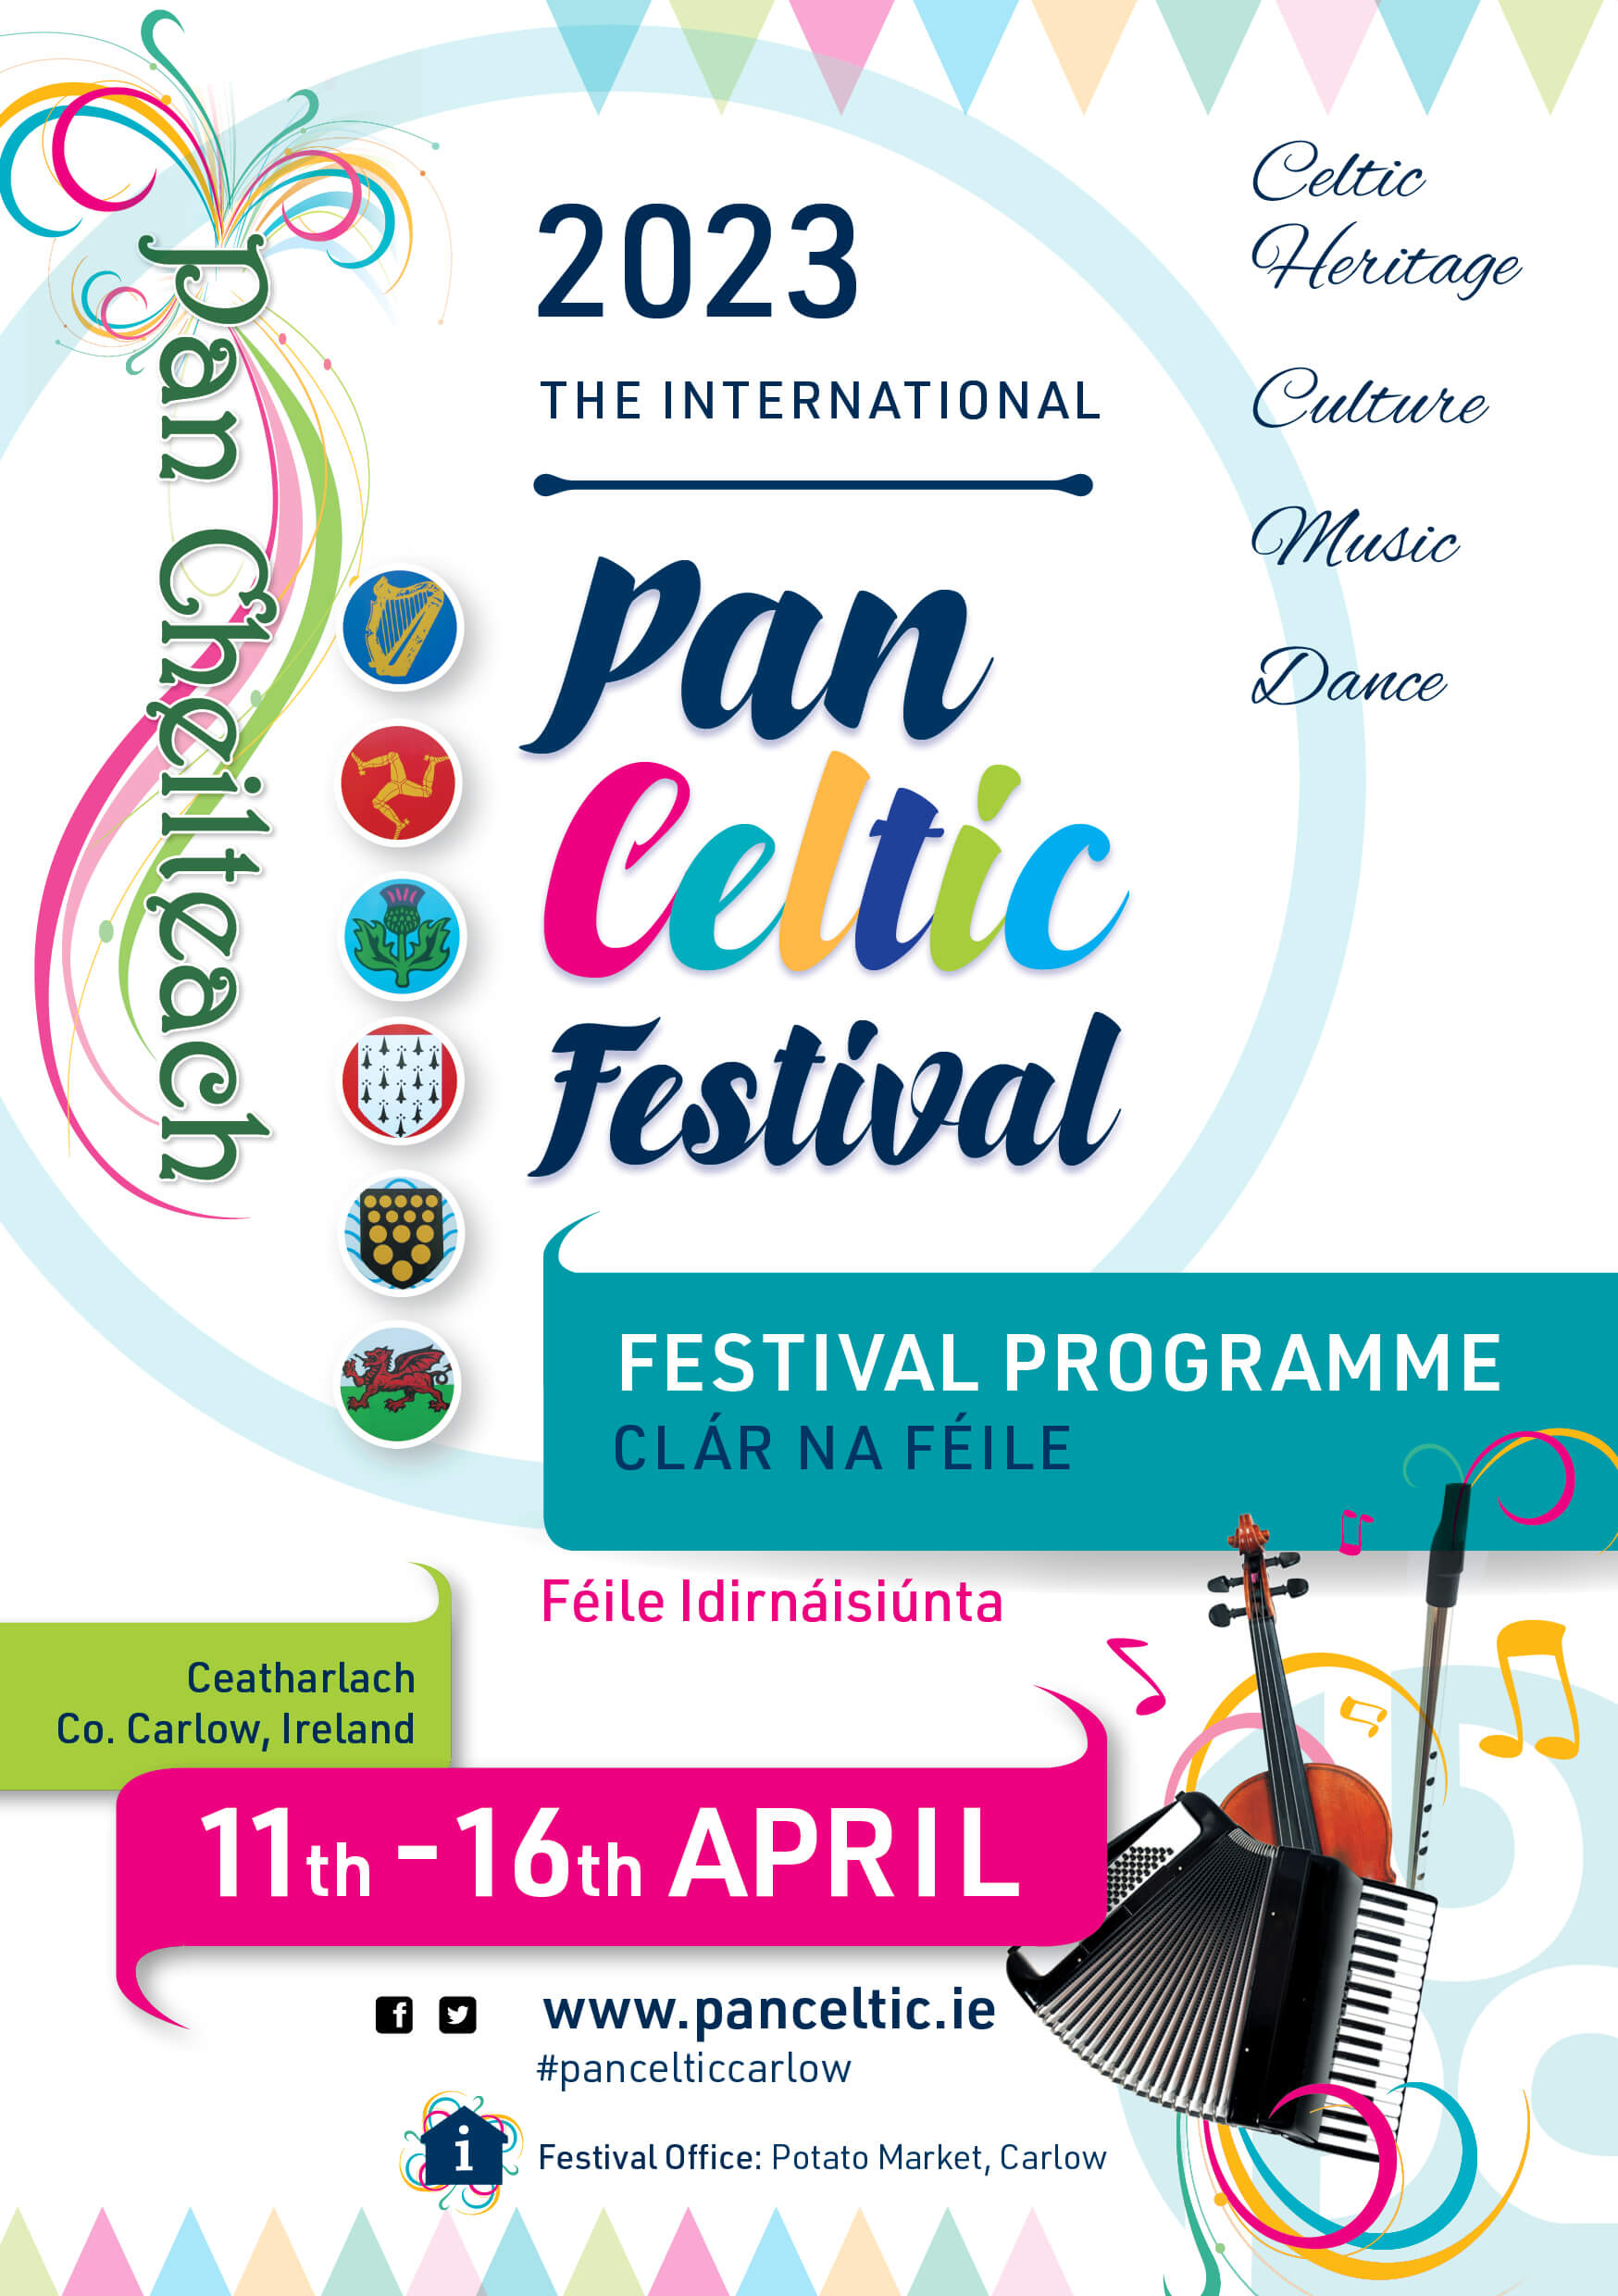 Pan Celtic Festival programme